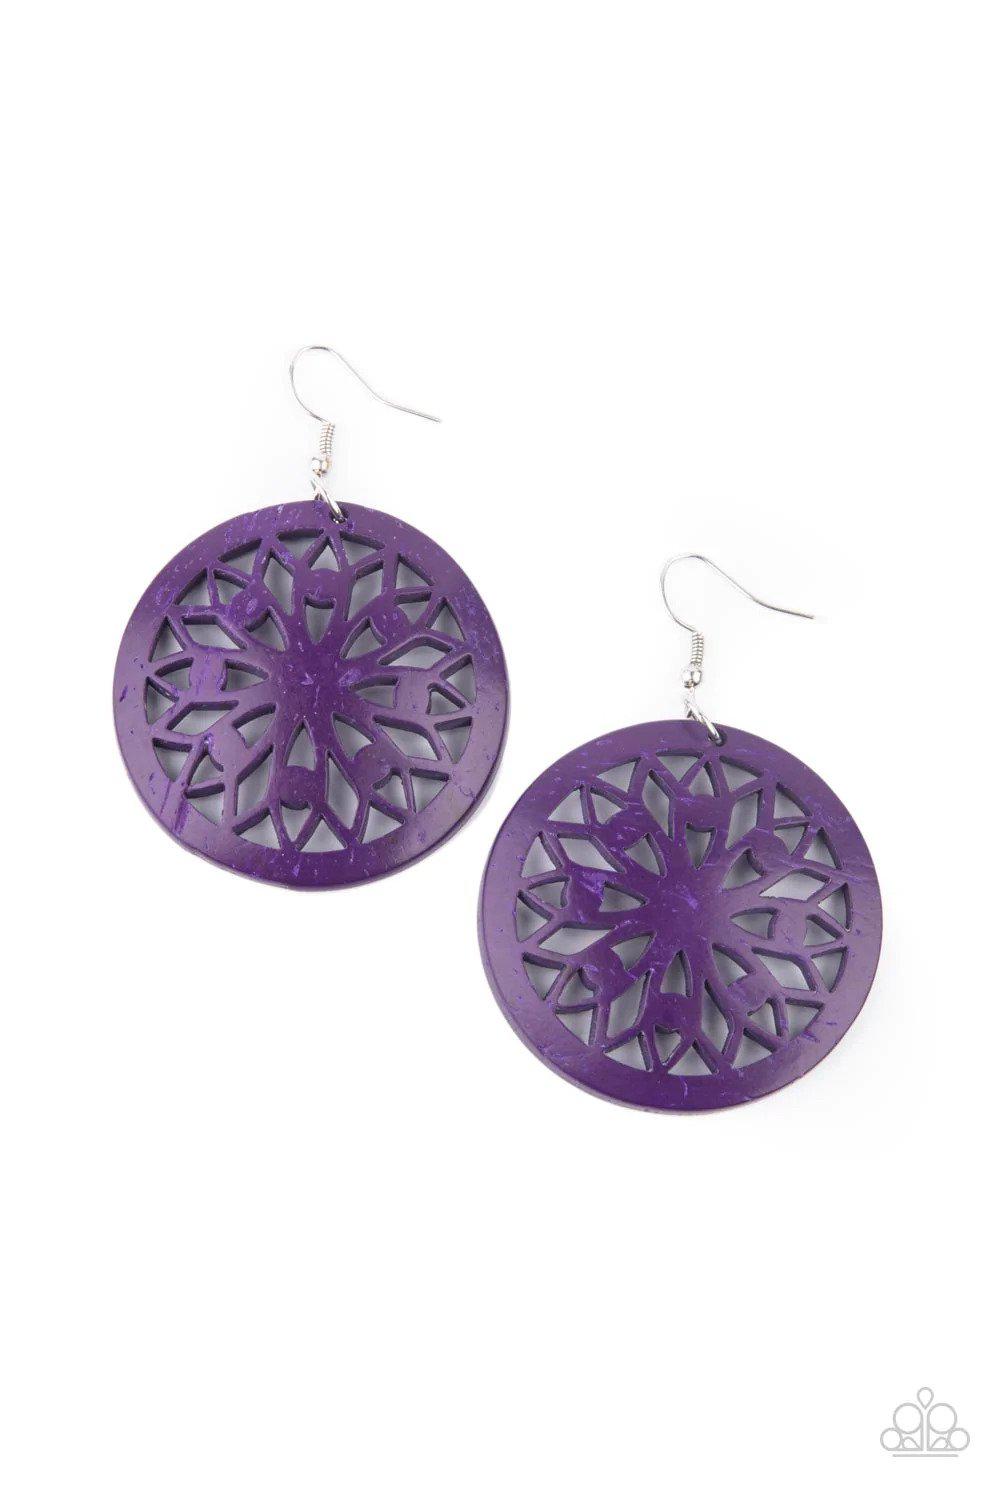 Ocean Canopy Purple Earrings - Paparazzi Accessories- lightbox - CarasShop.com - $5 Jewelry by Cara Jewels